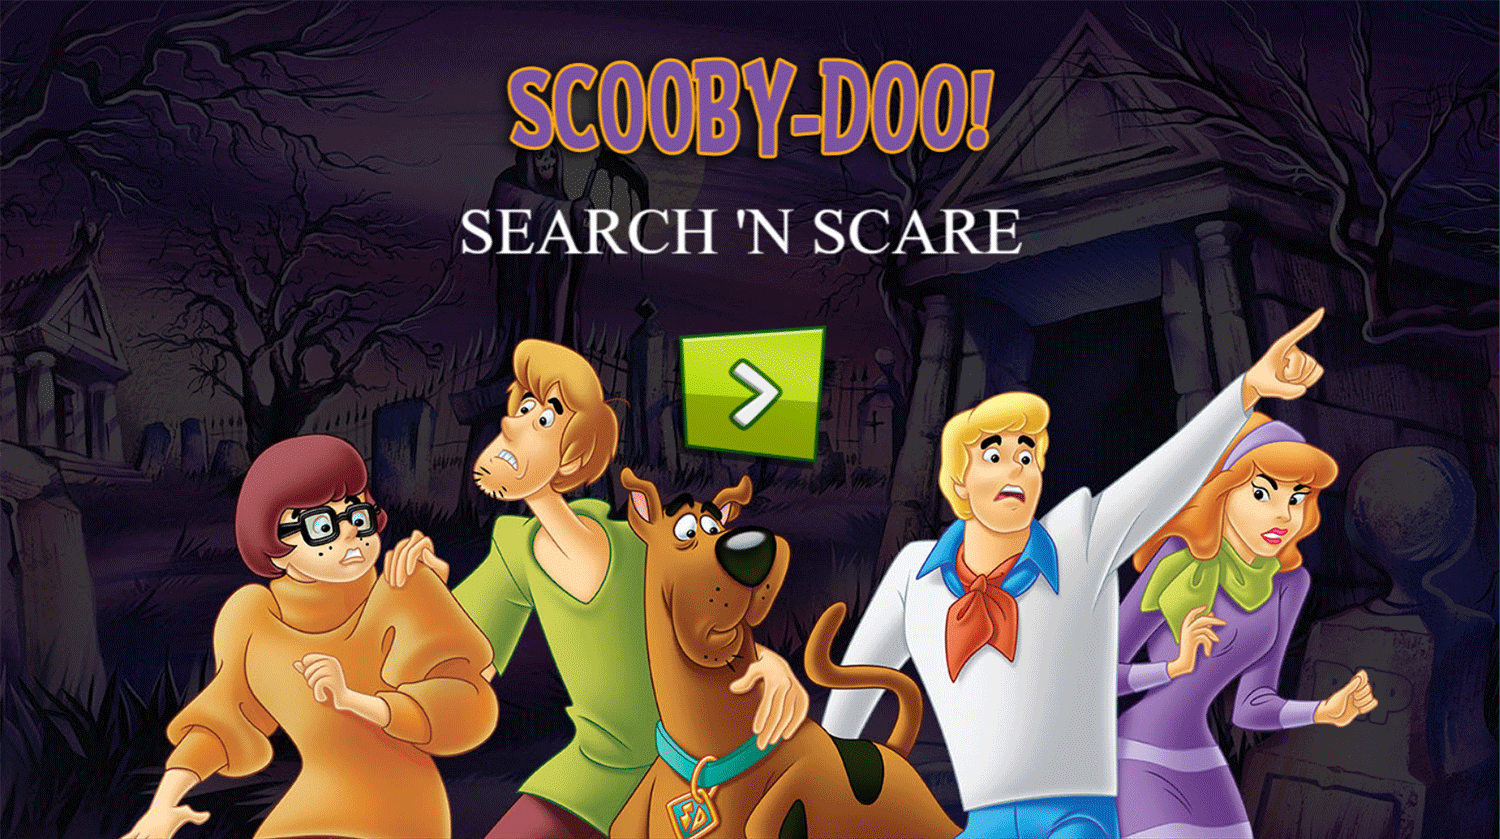 Scooby Doo Search N Scare Welcome Screen Screenshot.